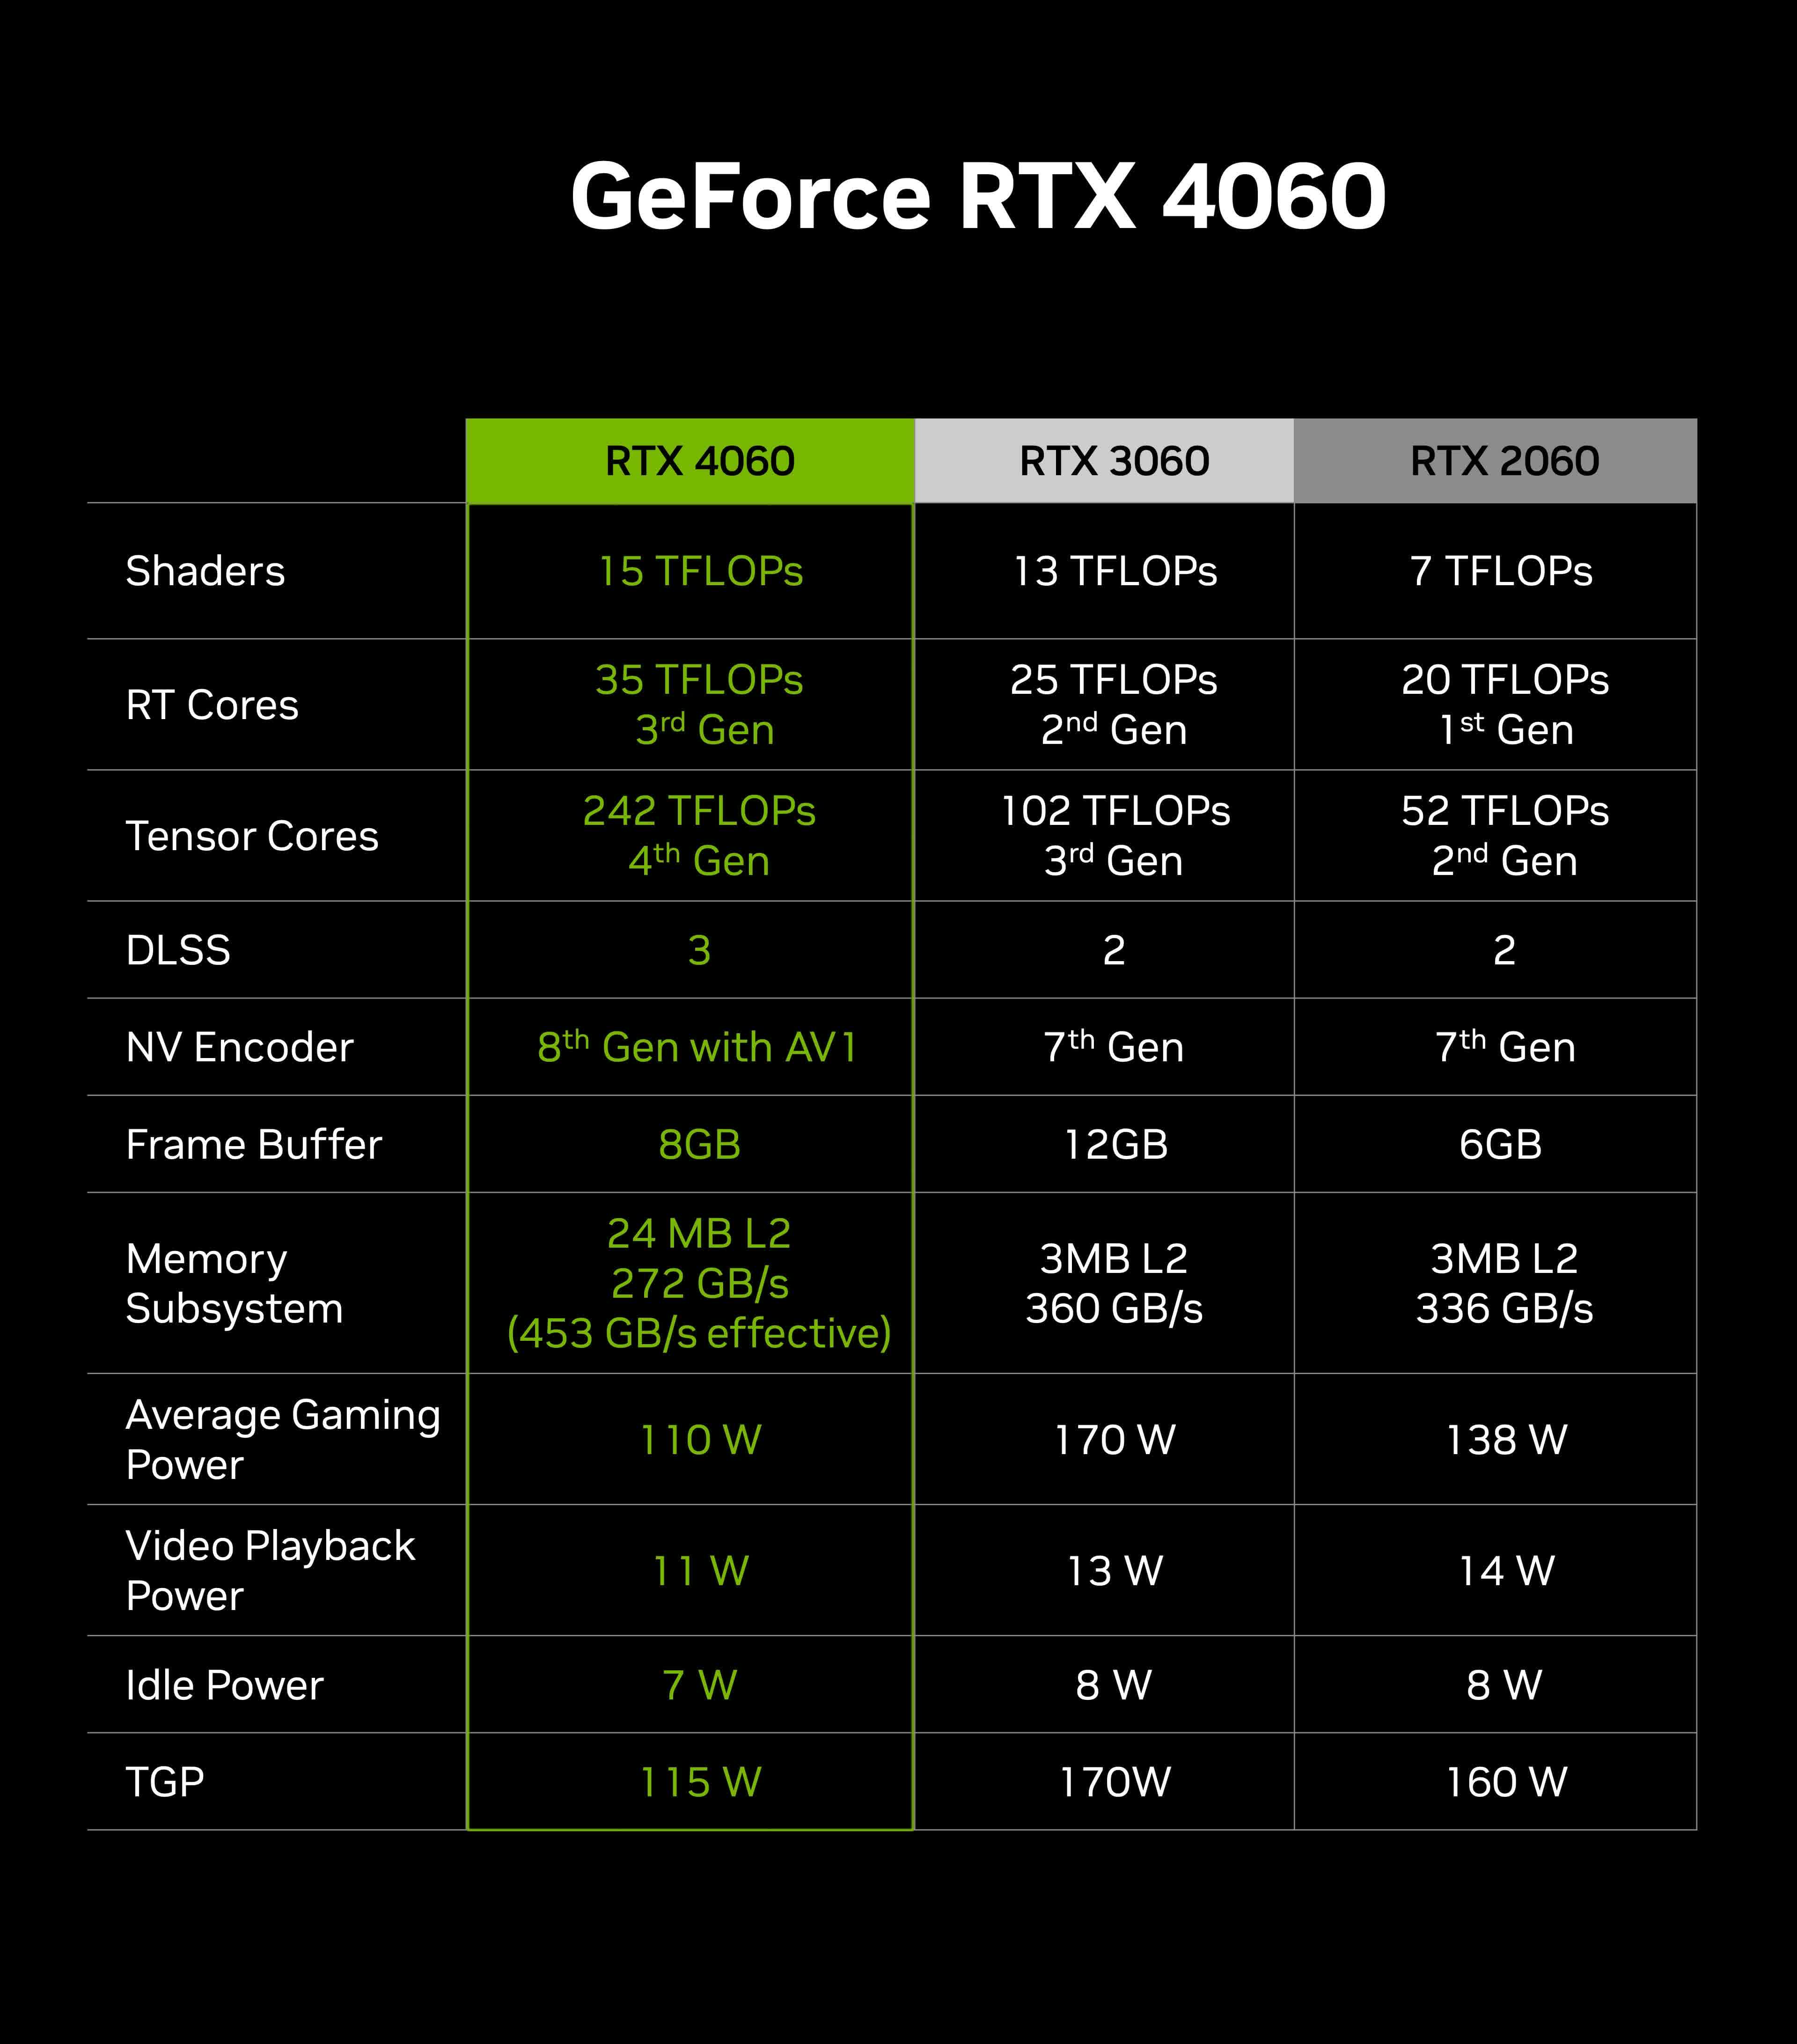 Nvidia launches three new GeForce RTX 4060 GPUs, starting at $300